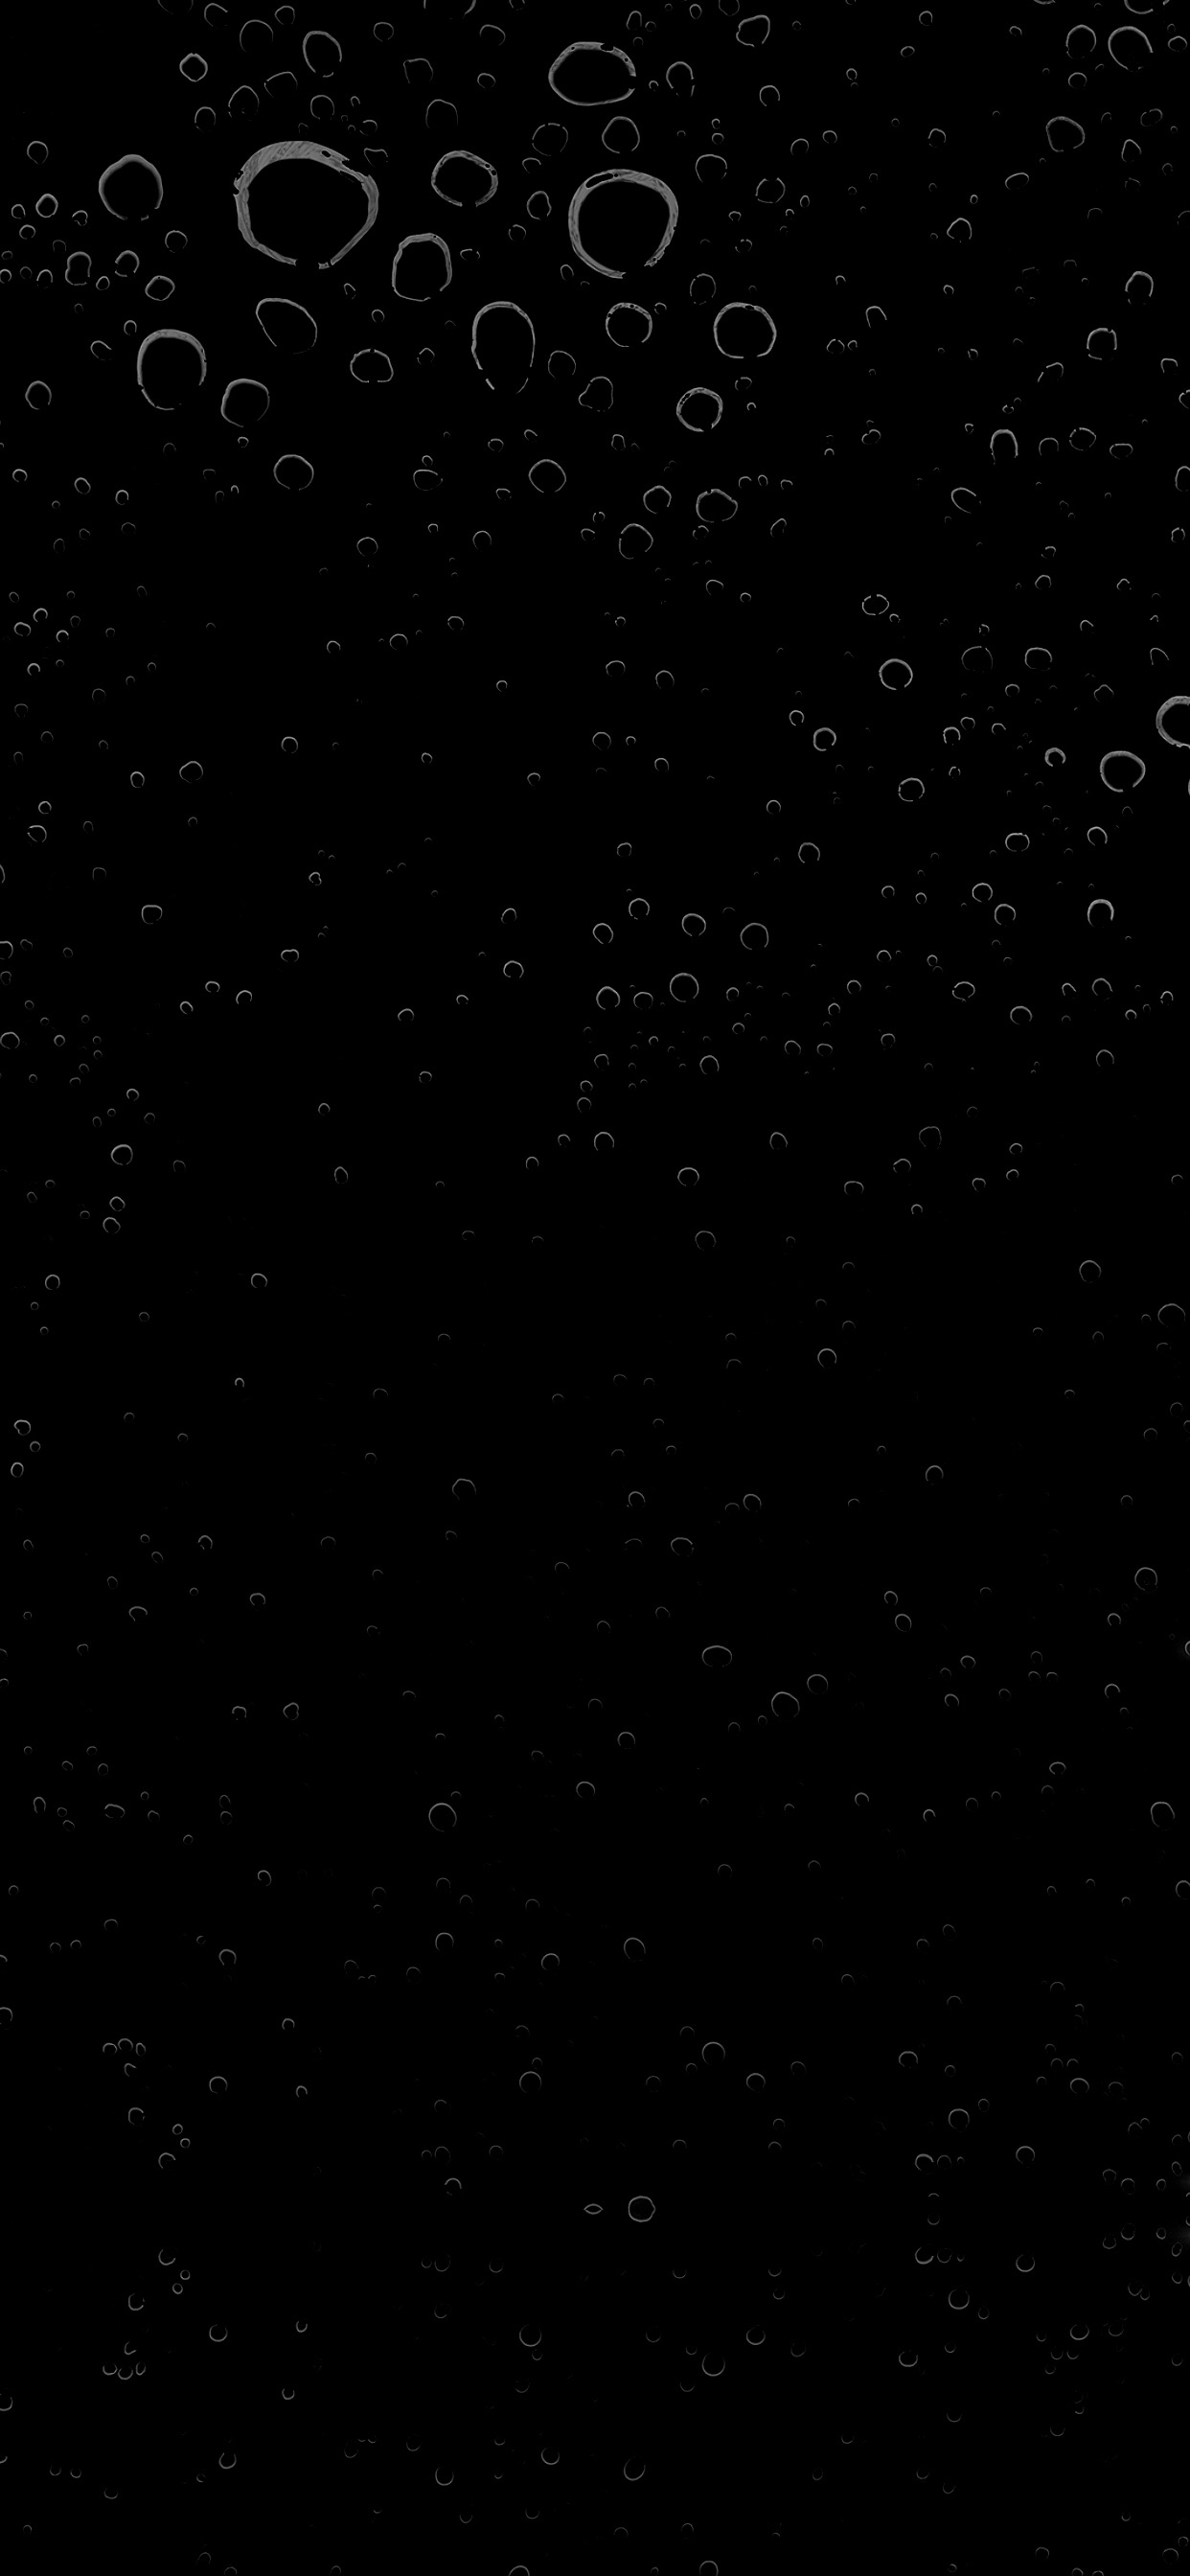 iOS 5 dark bubbles wallpaper